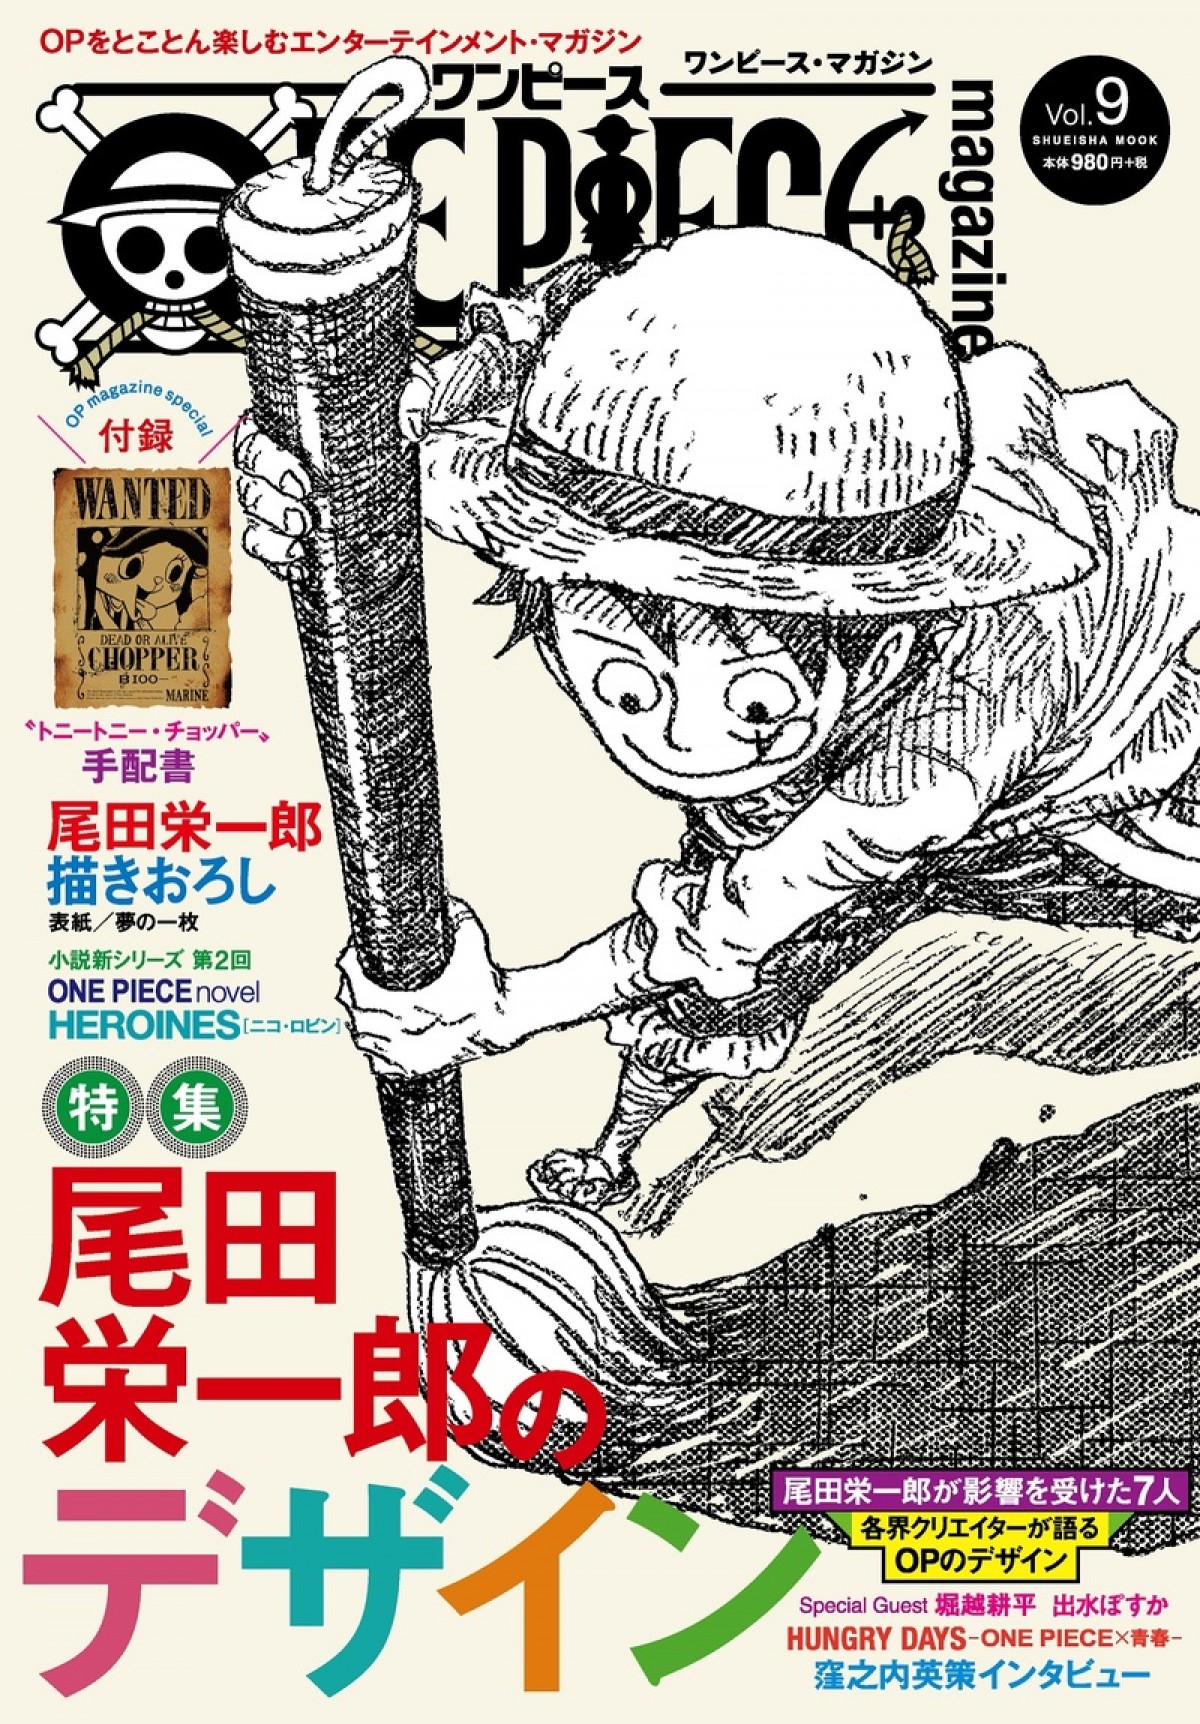 「ONE PIECE magazine Vol.9」4.24発売　ヒロアカ・堀越耕平描き下ろしイラスト収録